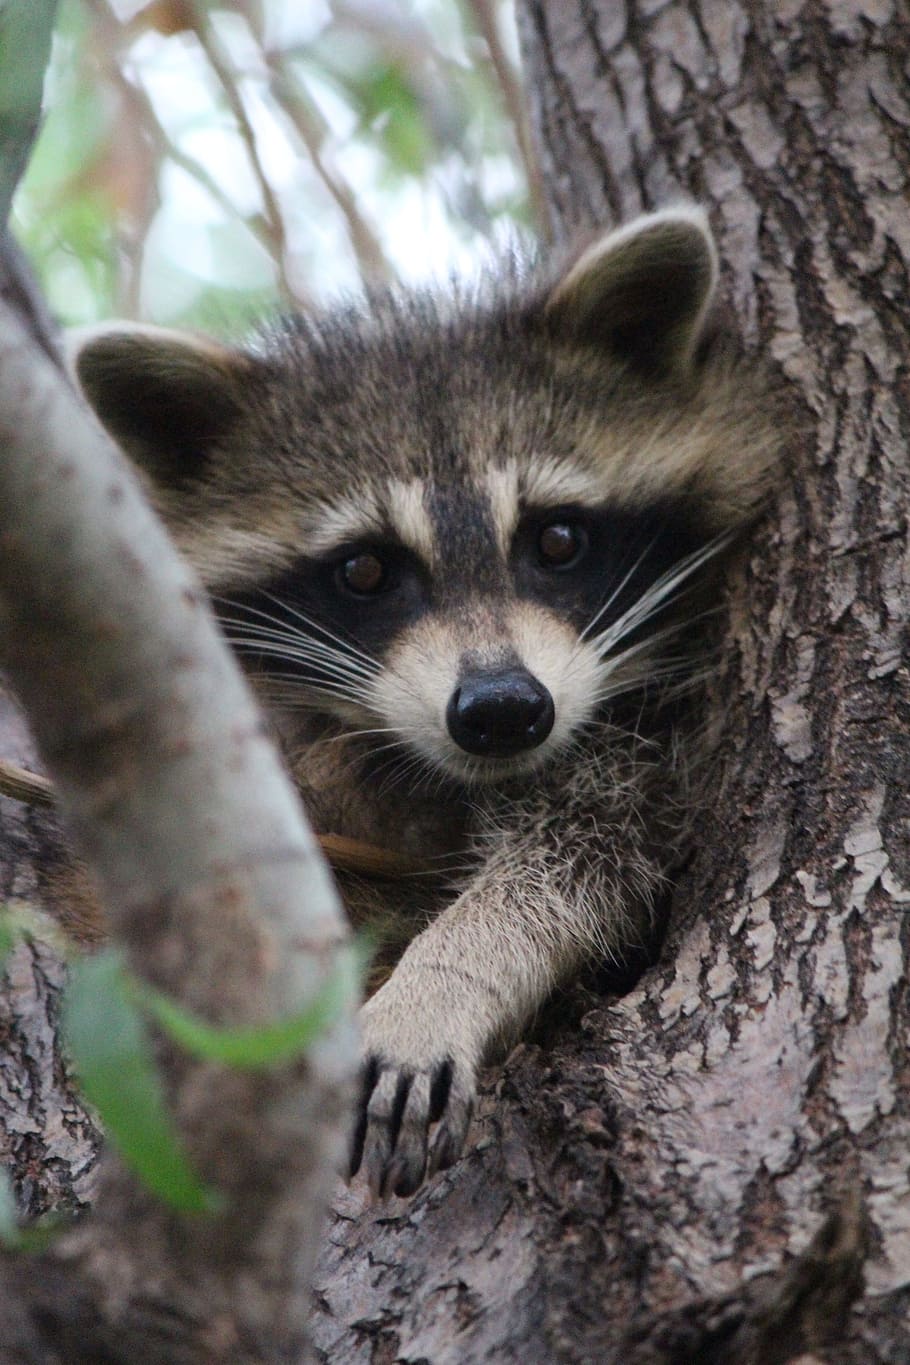 gray, black, raccoon, tree trunk, daytime, baby, cute, wildlife, animal, inquisitive